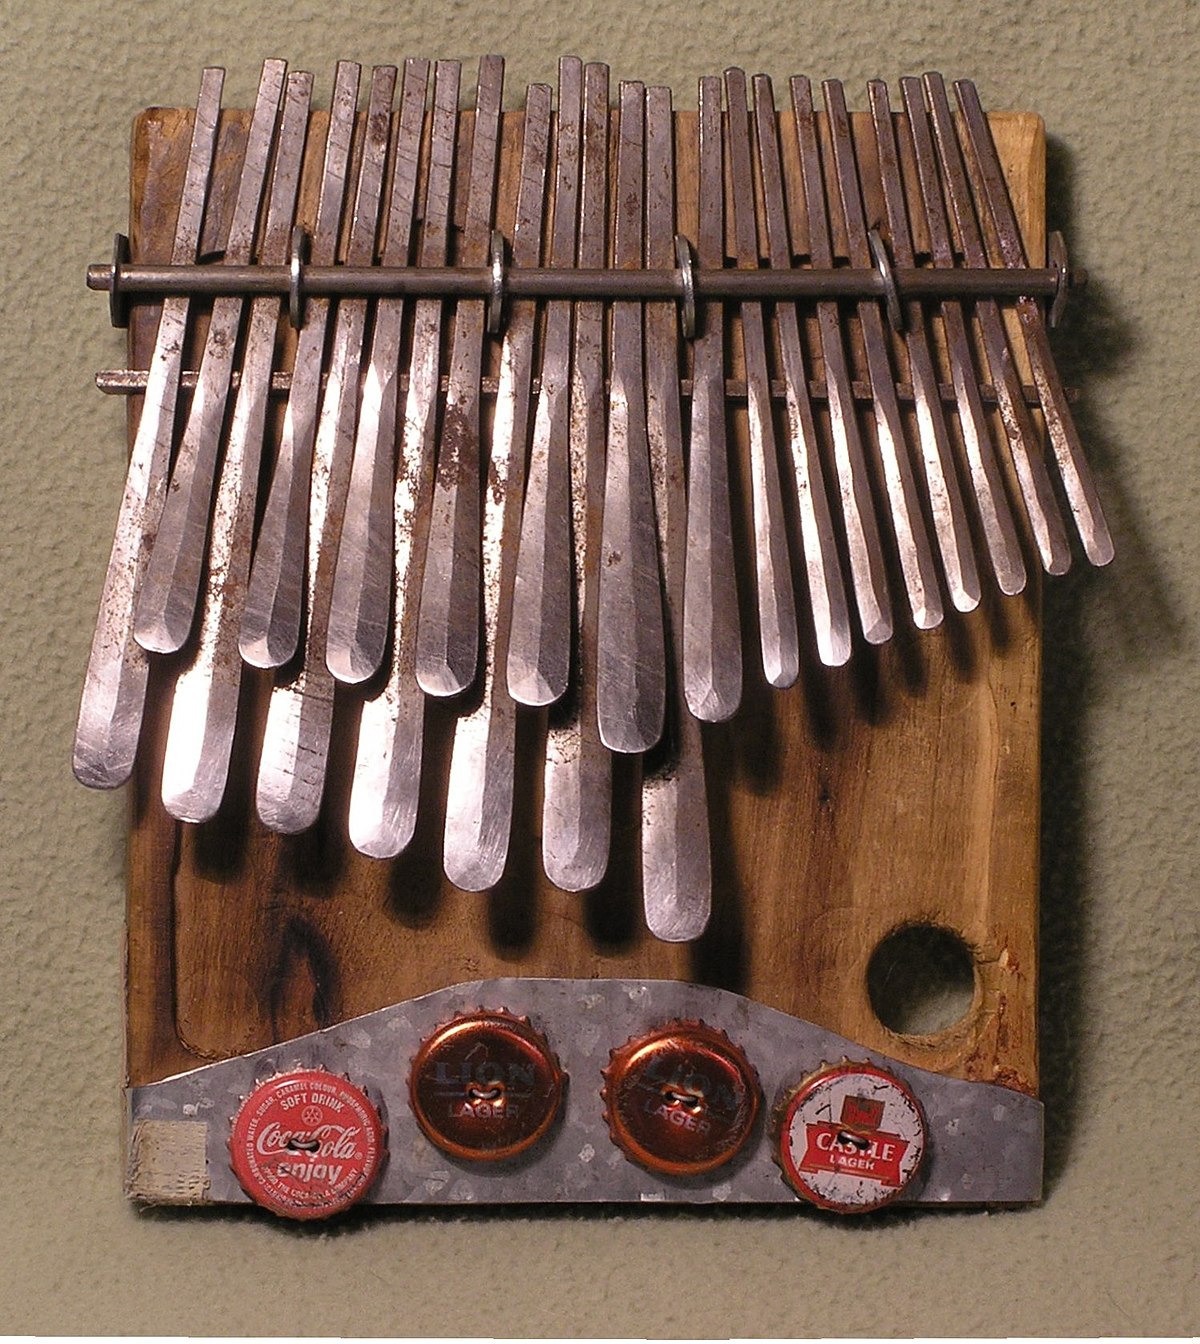 National instrument of Zimbabwe - Mbira dzavadzimu